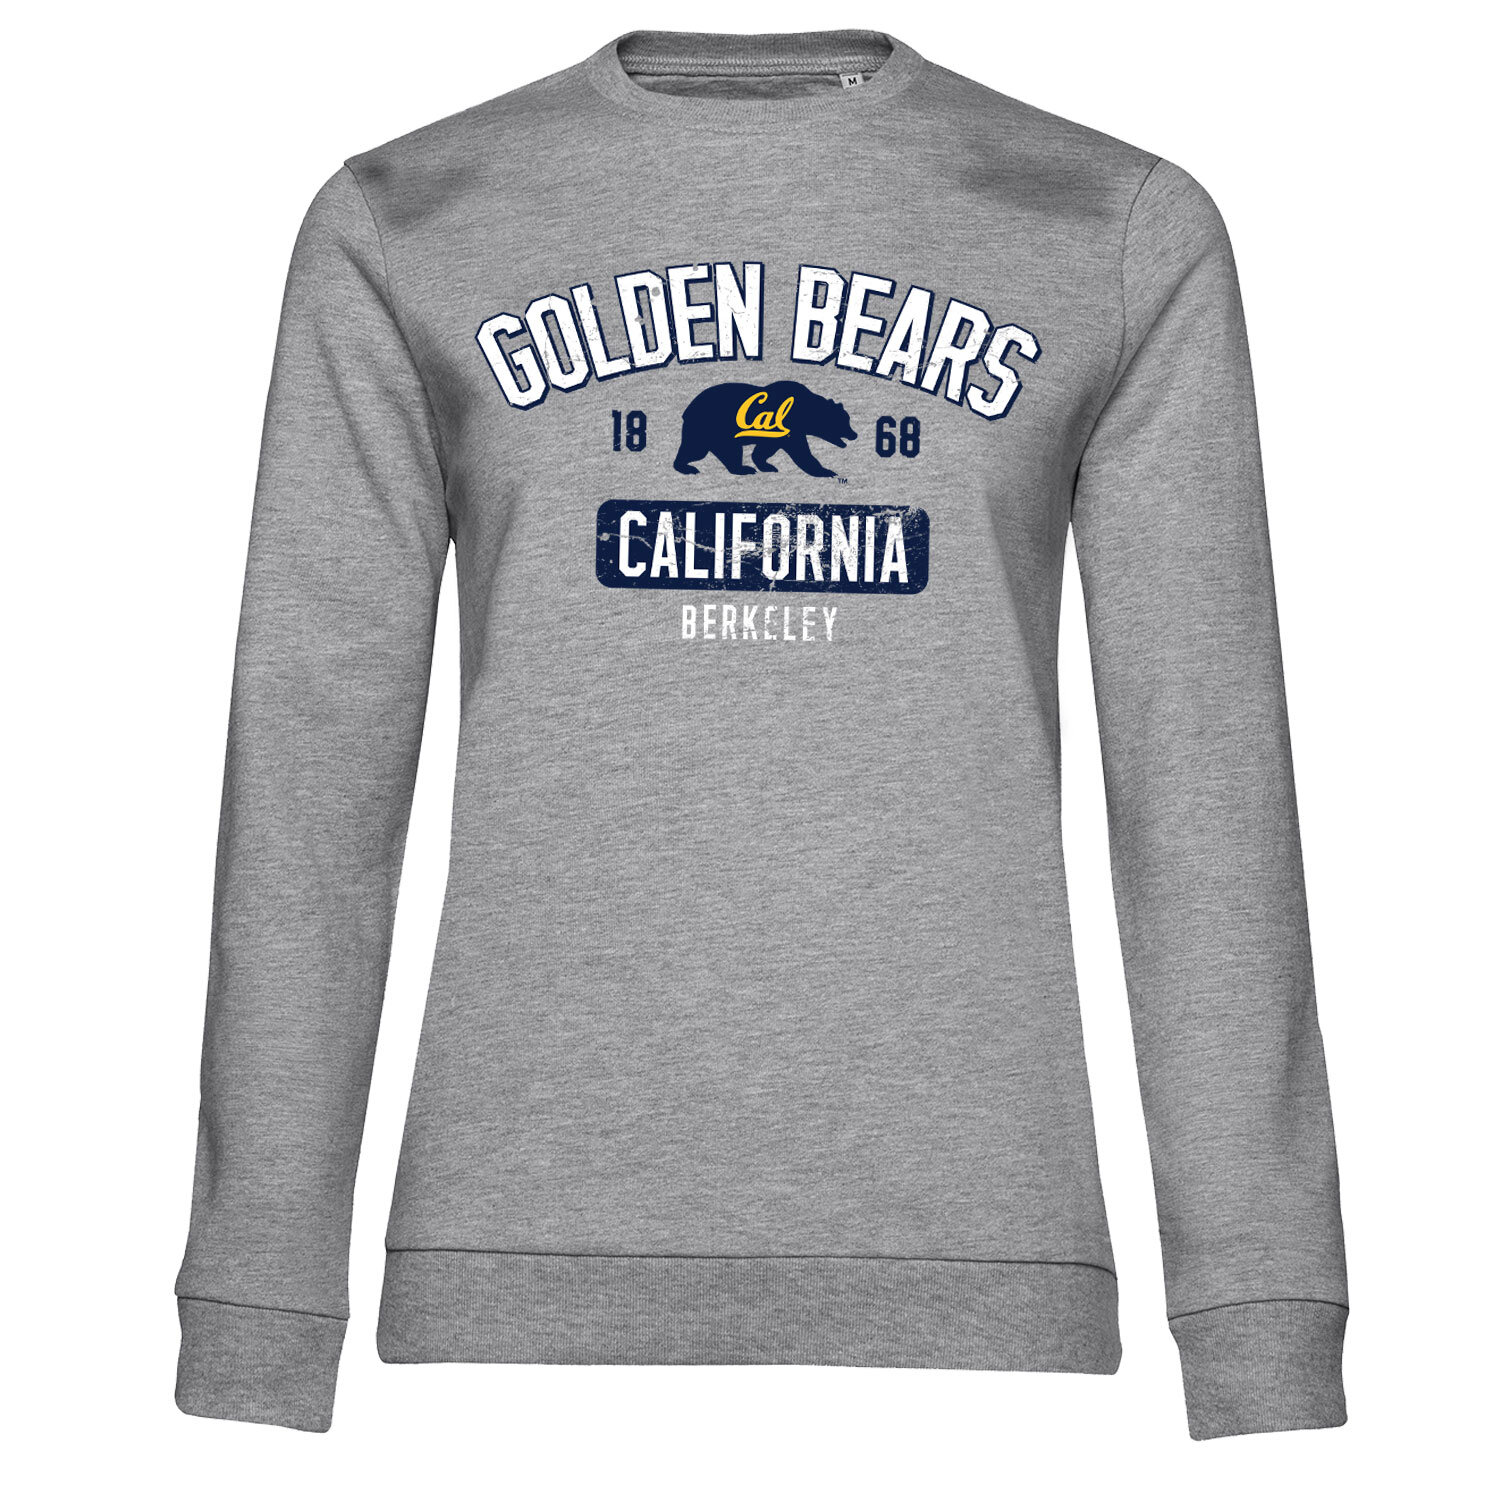 California Golden Bears Washed Girly Sweatshirt